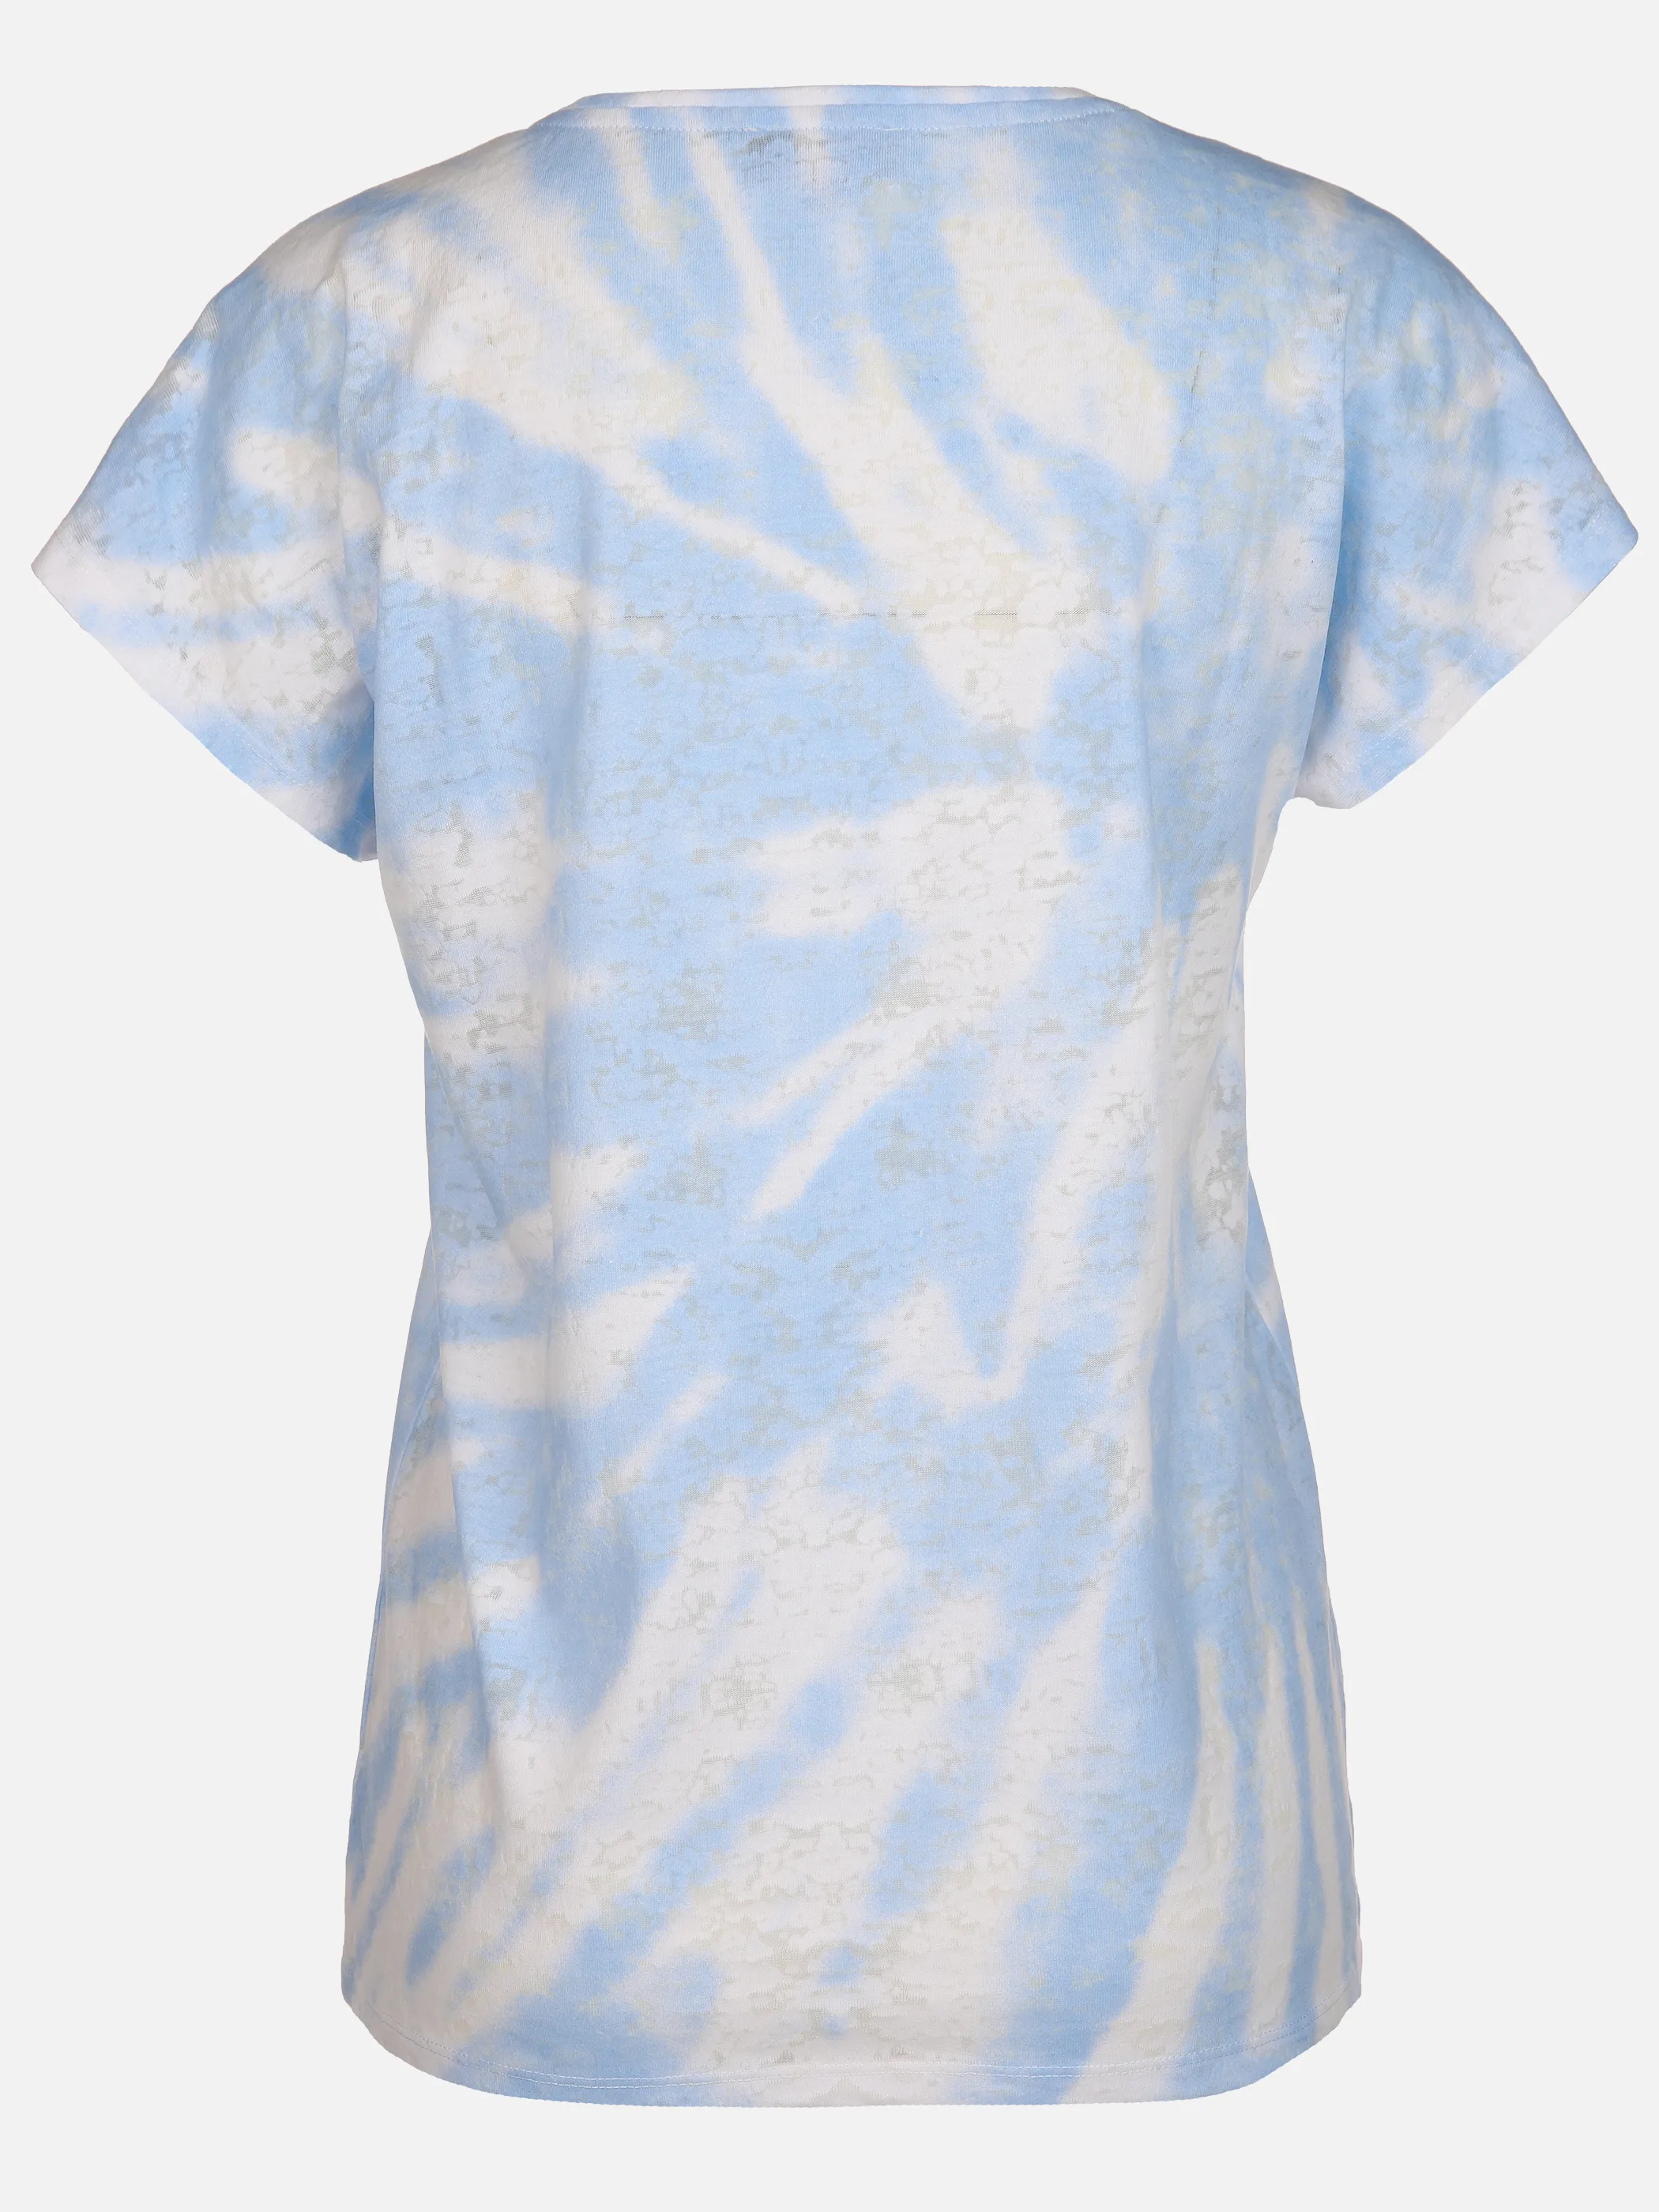 Sure Da-T-Shirt m. Batikdruck Blau 889927 CLOUD BLUE 2